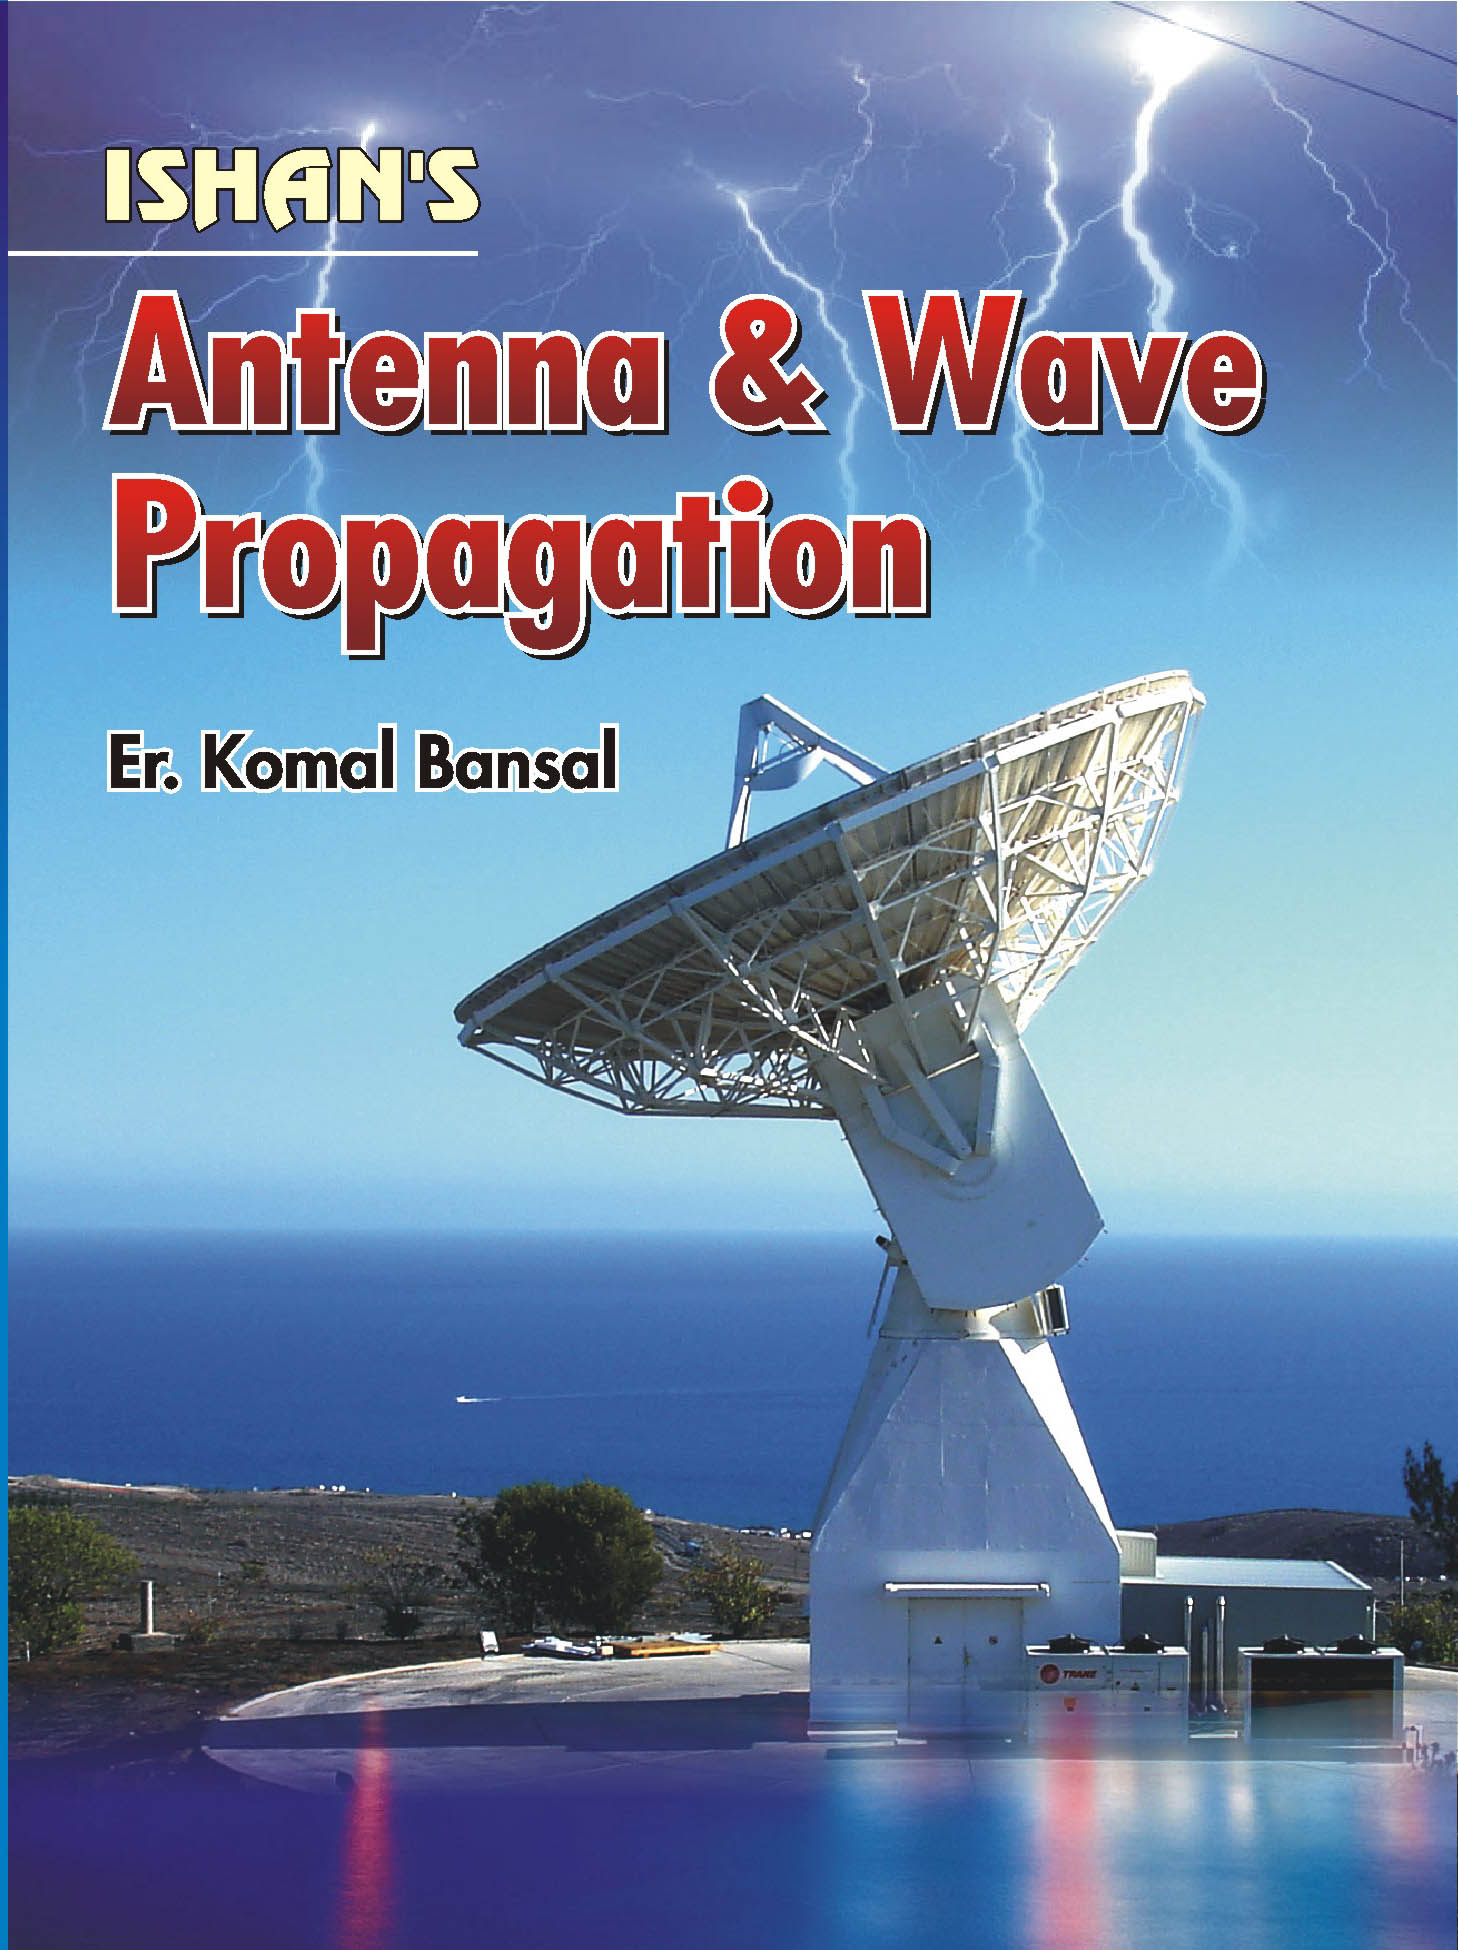 Anteena & Wave propagation